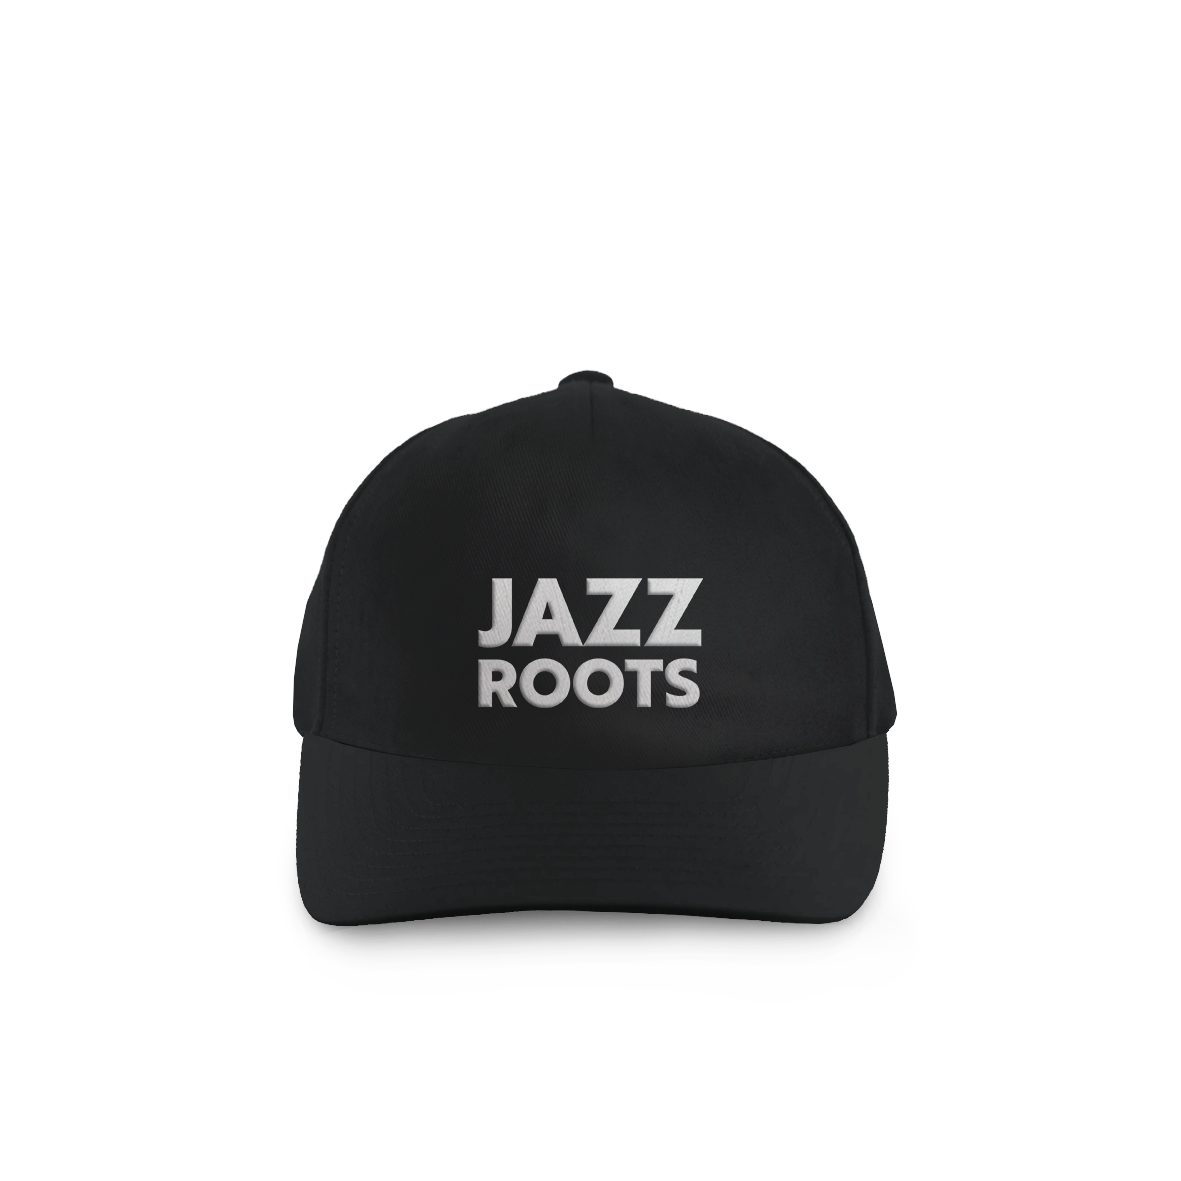 JAZZ ROOTS "Logo" Black Cap